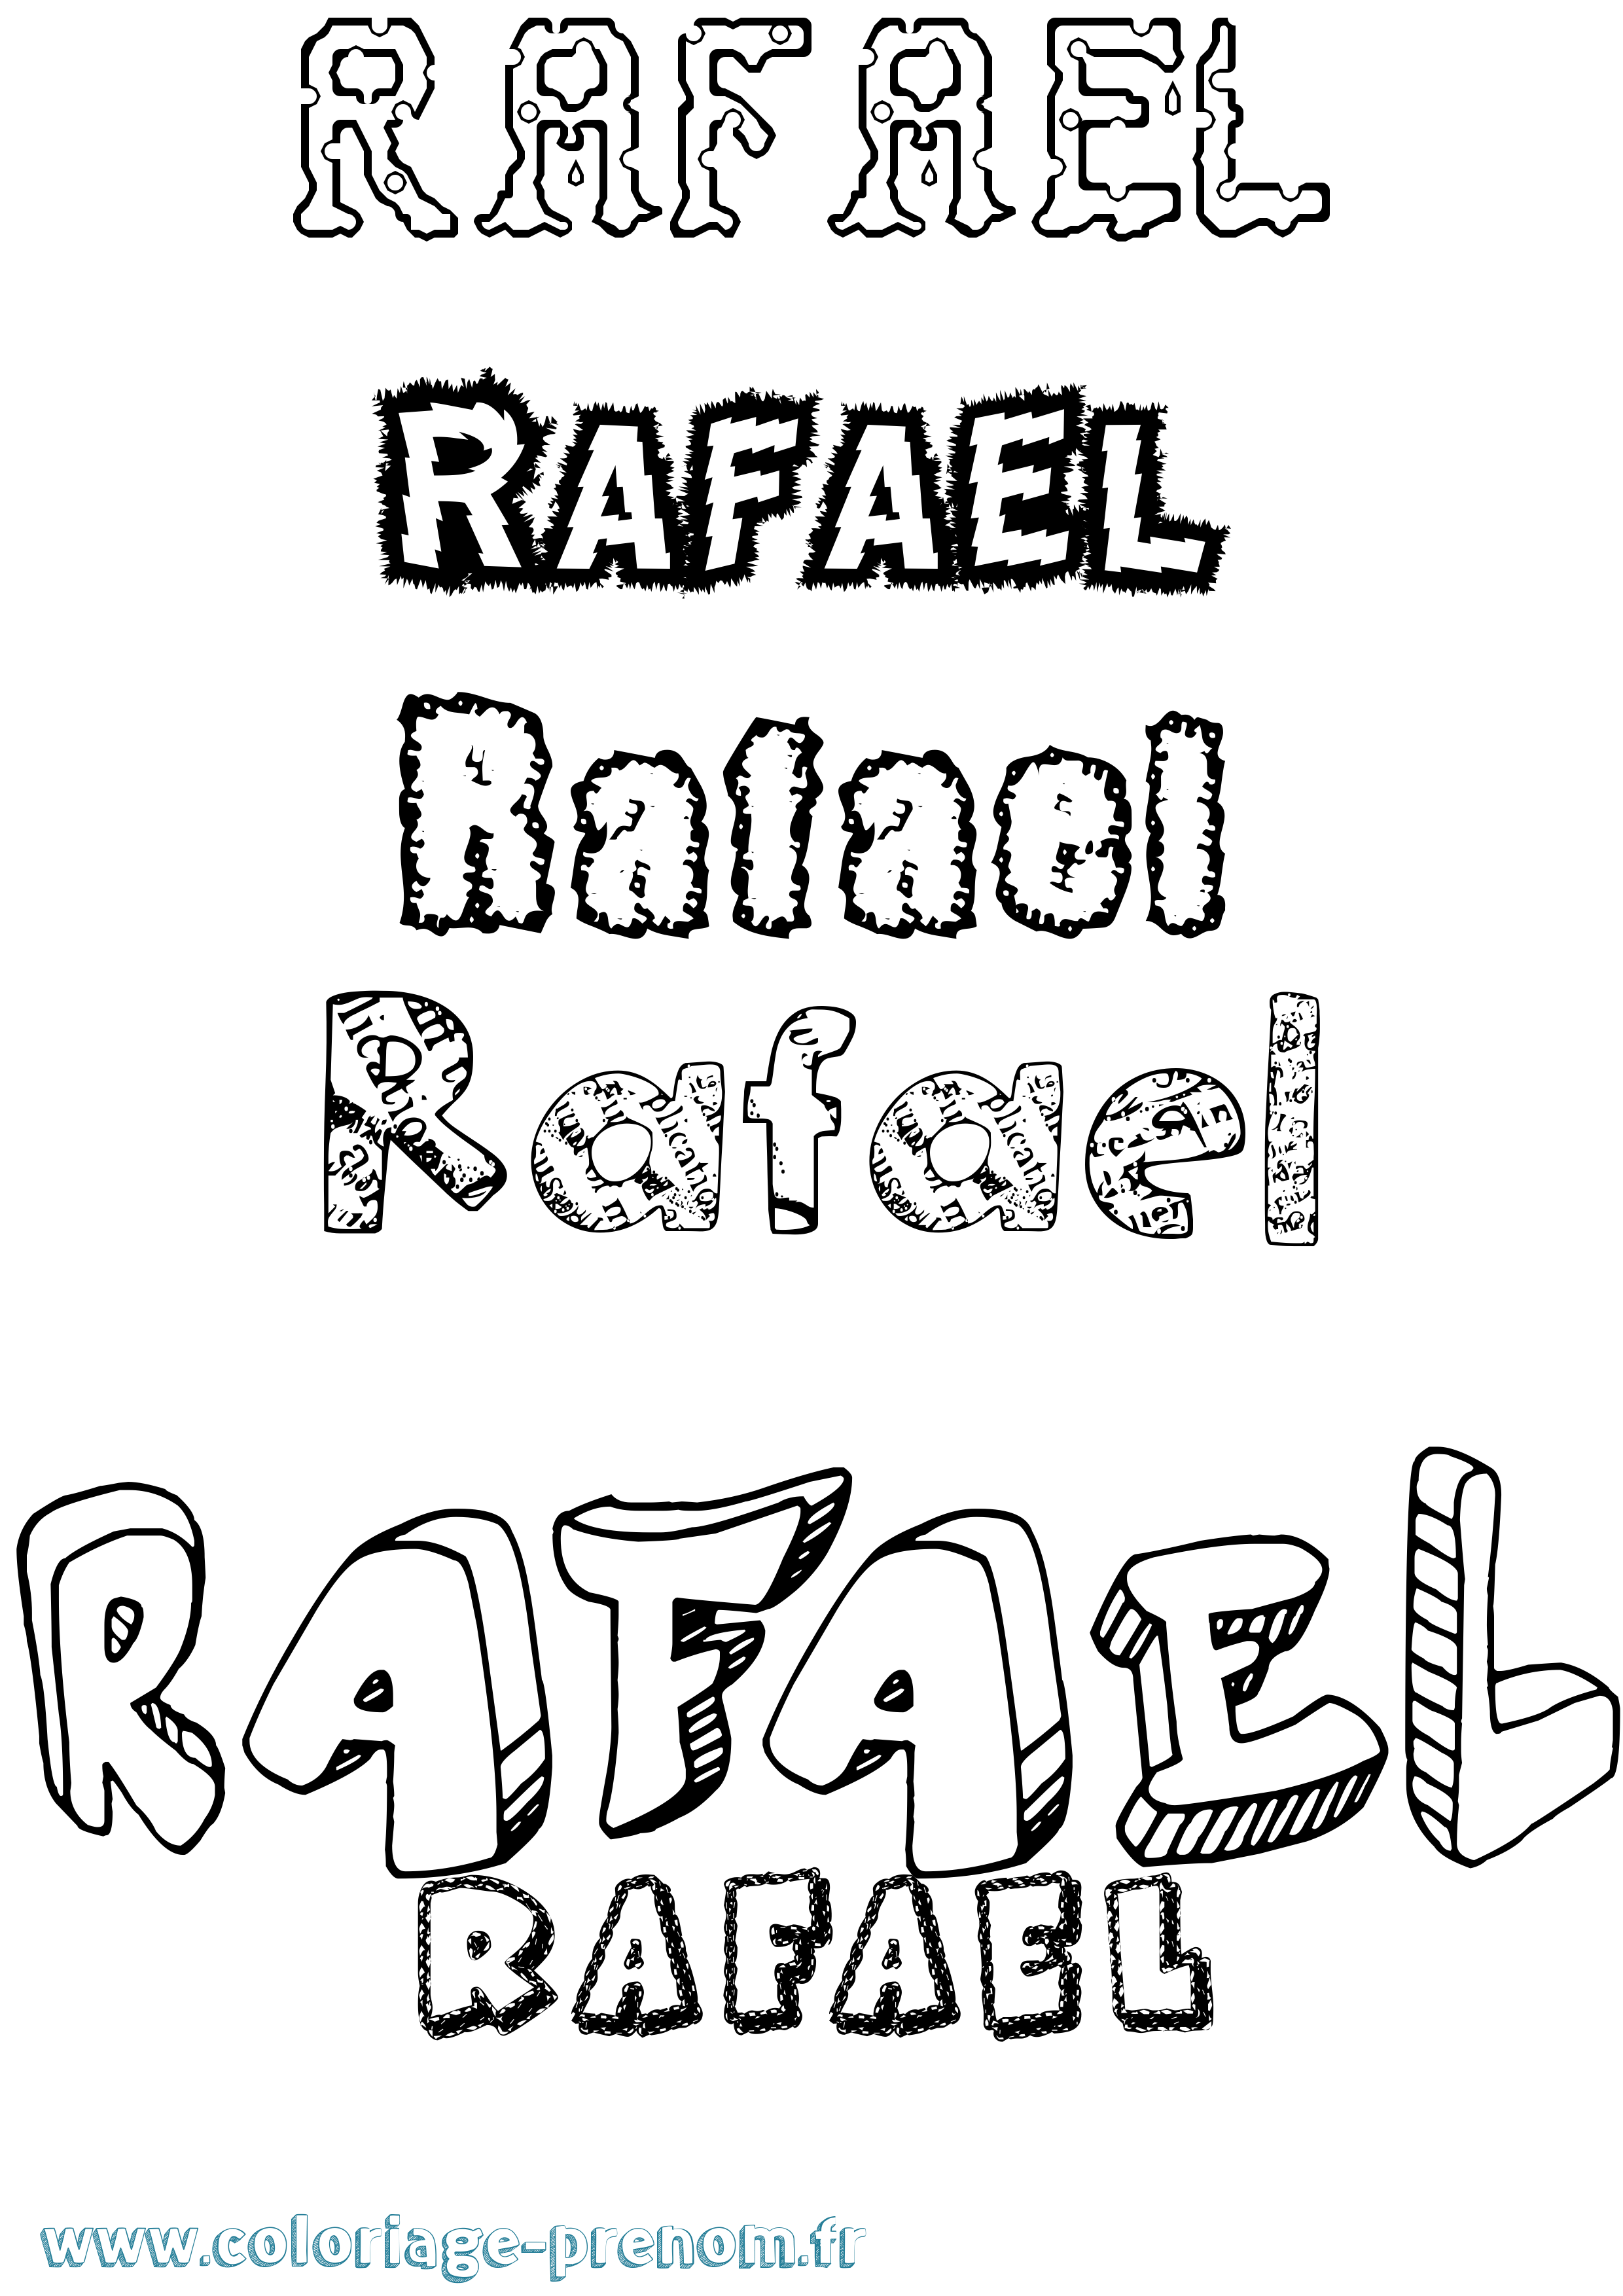 Coloriage prénom Rafael